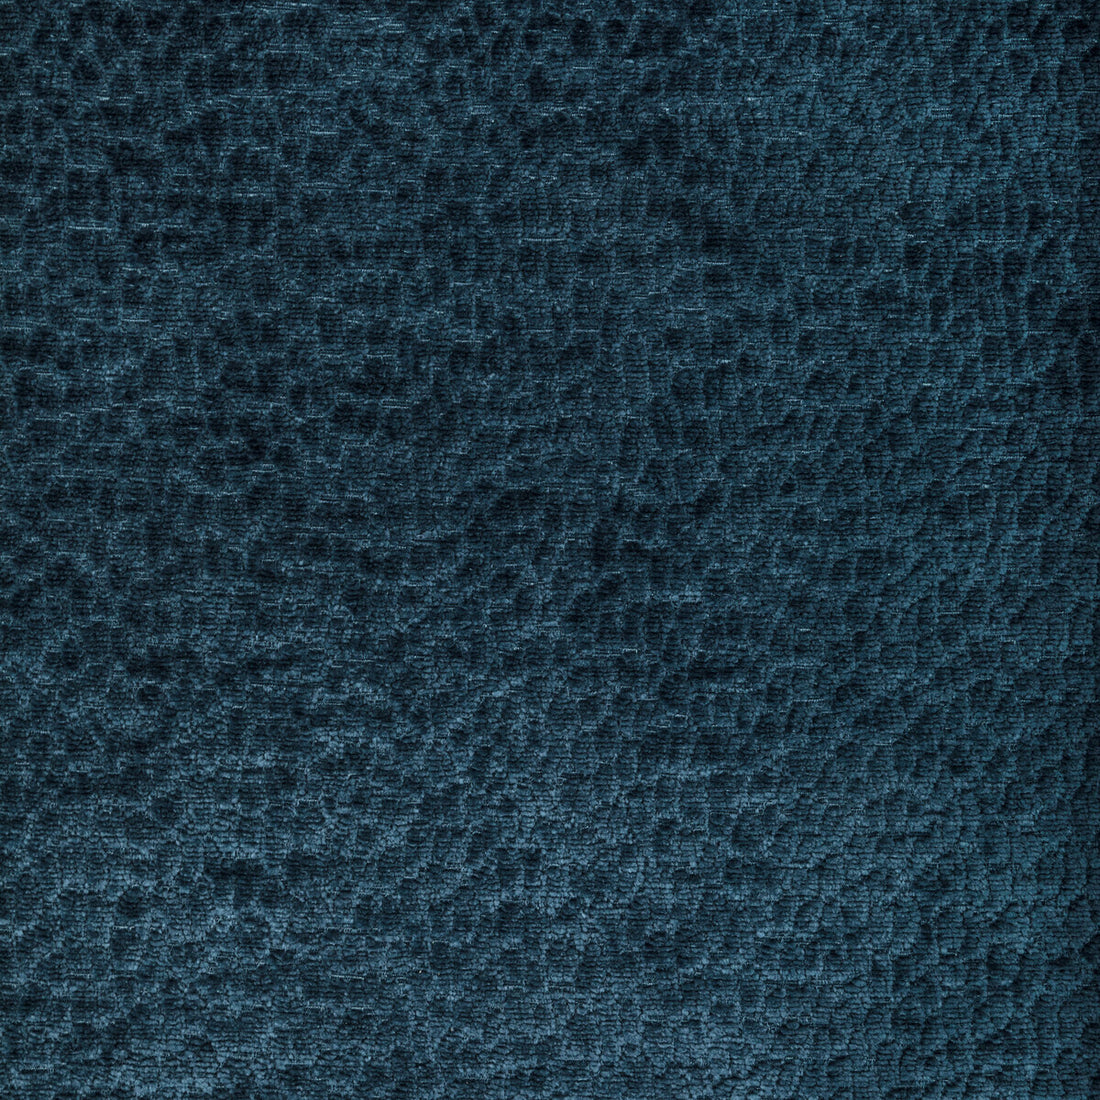 Kravet Smart fabric in 36606-5 color - pattern 36606.5.0 - by Kravet Smart in the Performance Kravetarmor collection